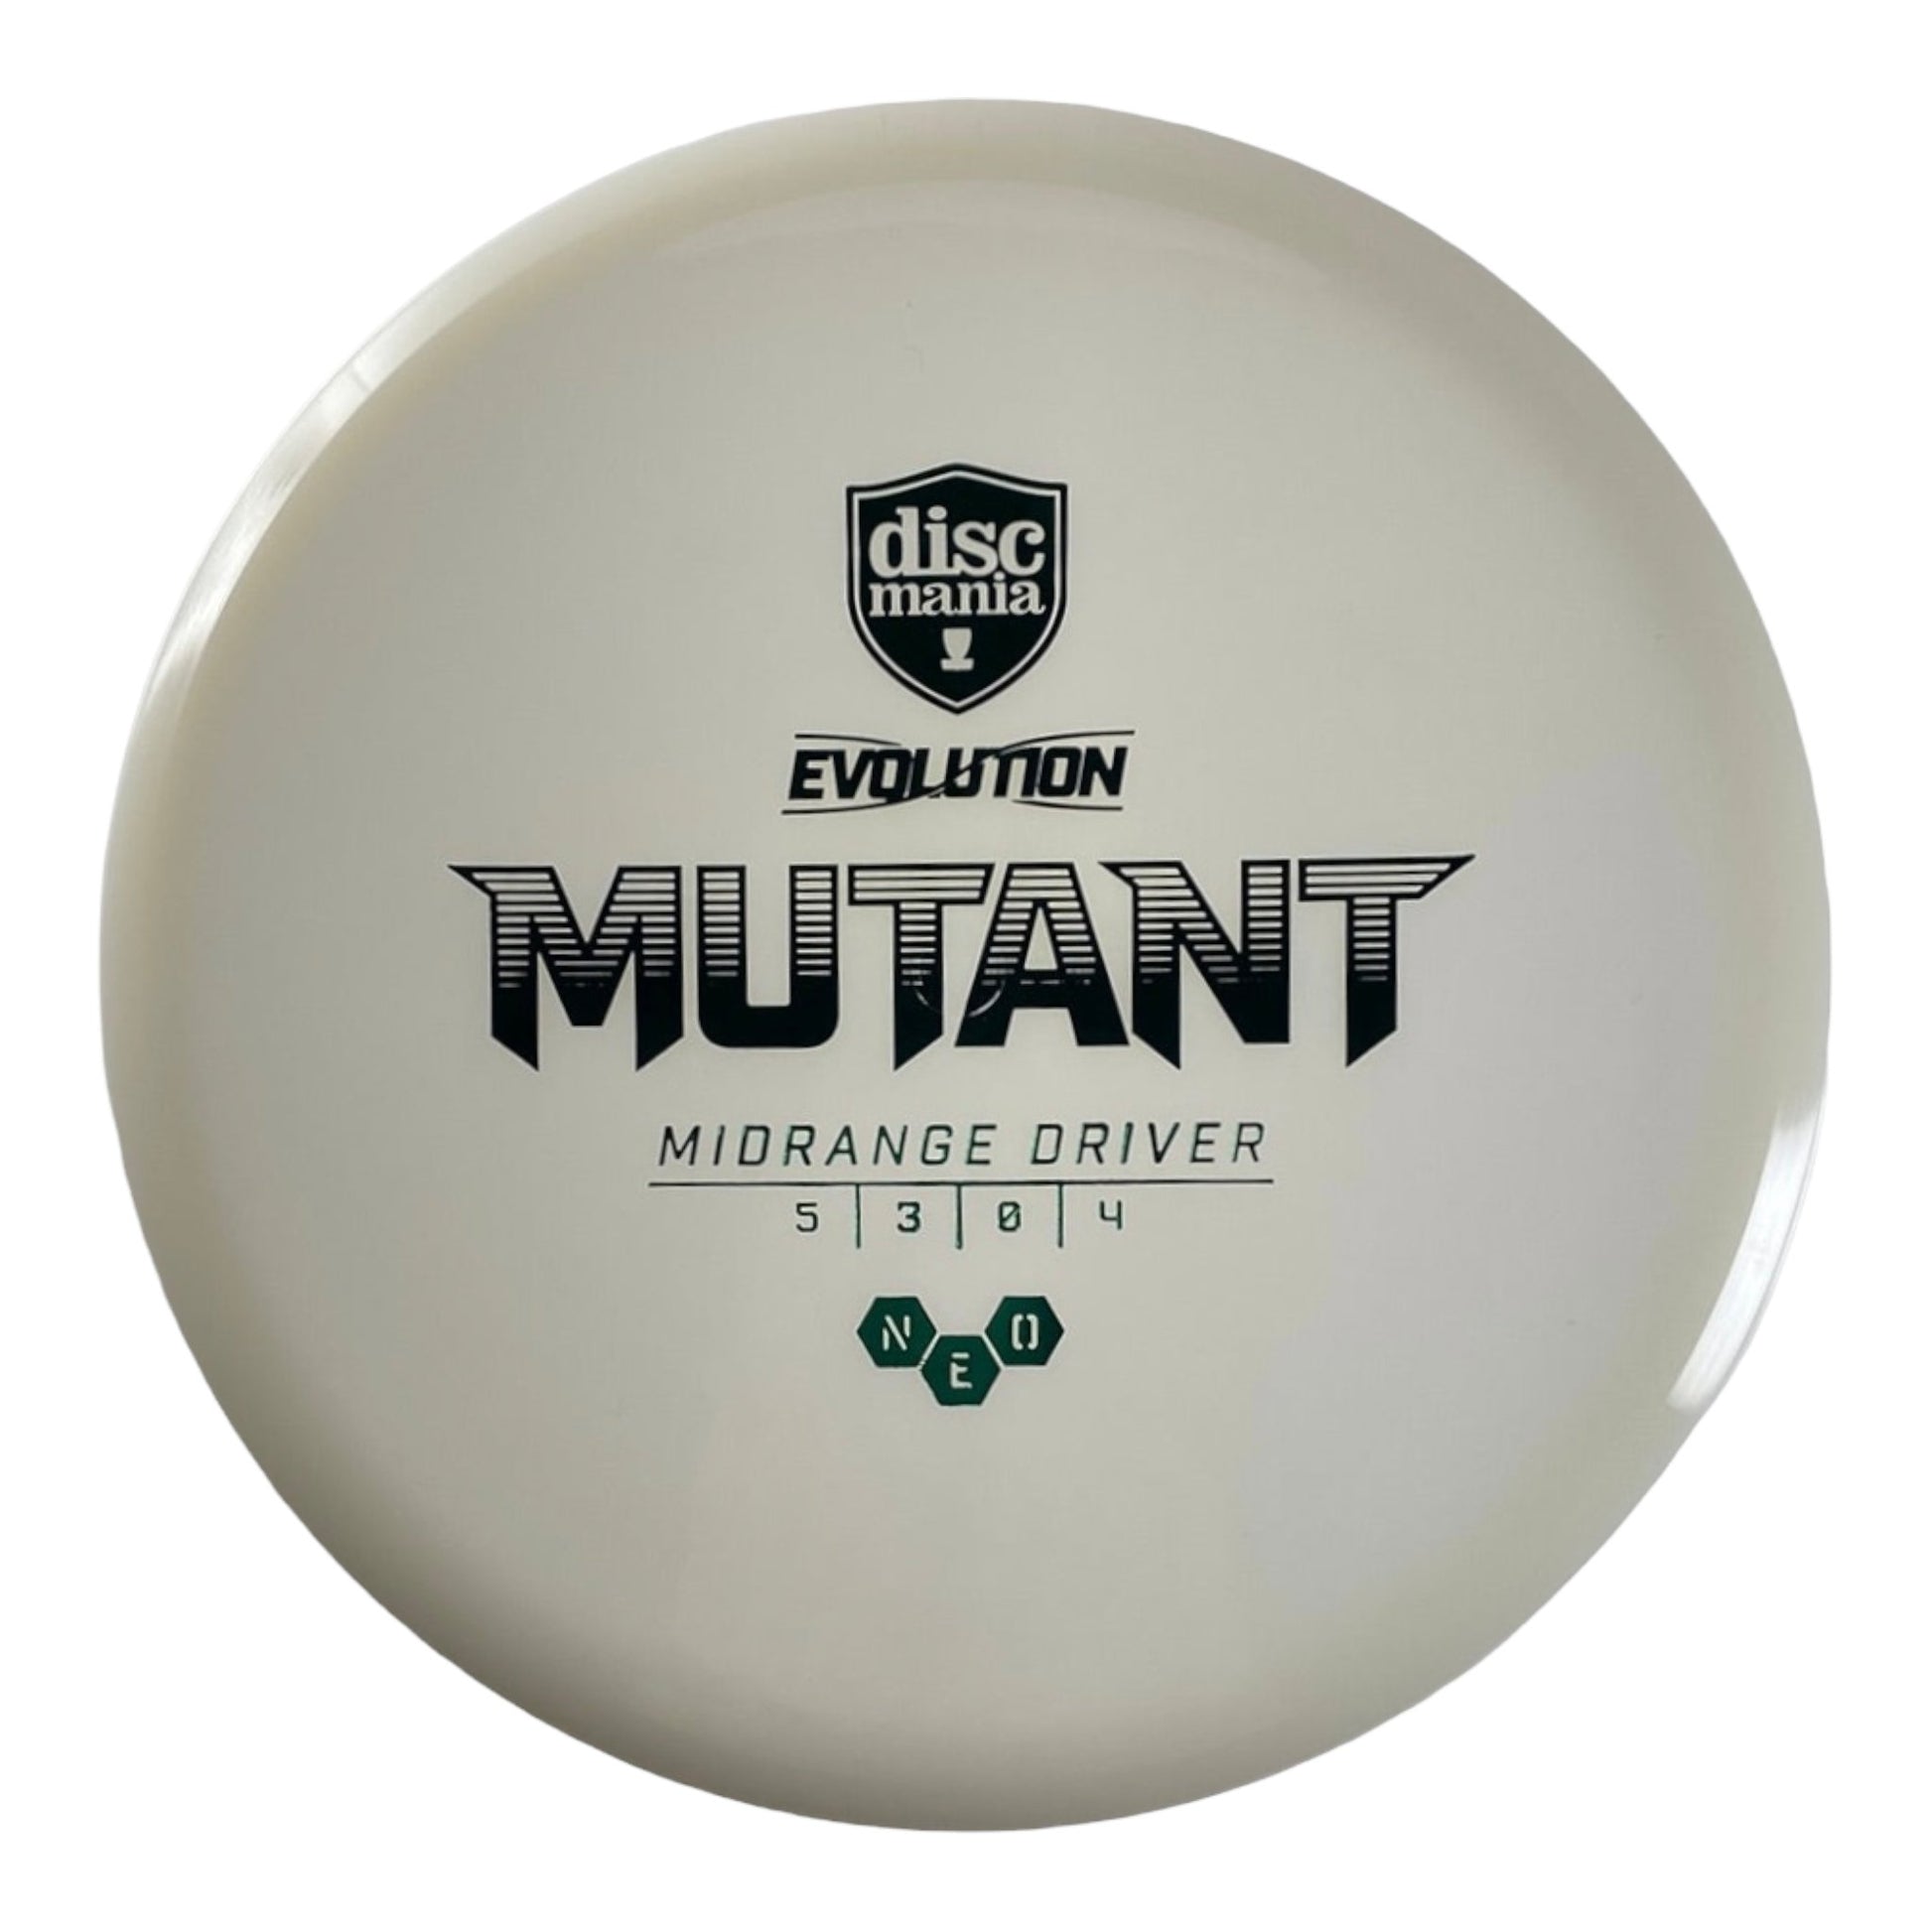 Discmania Mutant | Neo | White/Green 180g Disc Golf